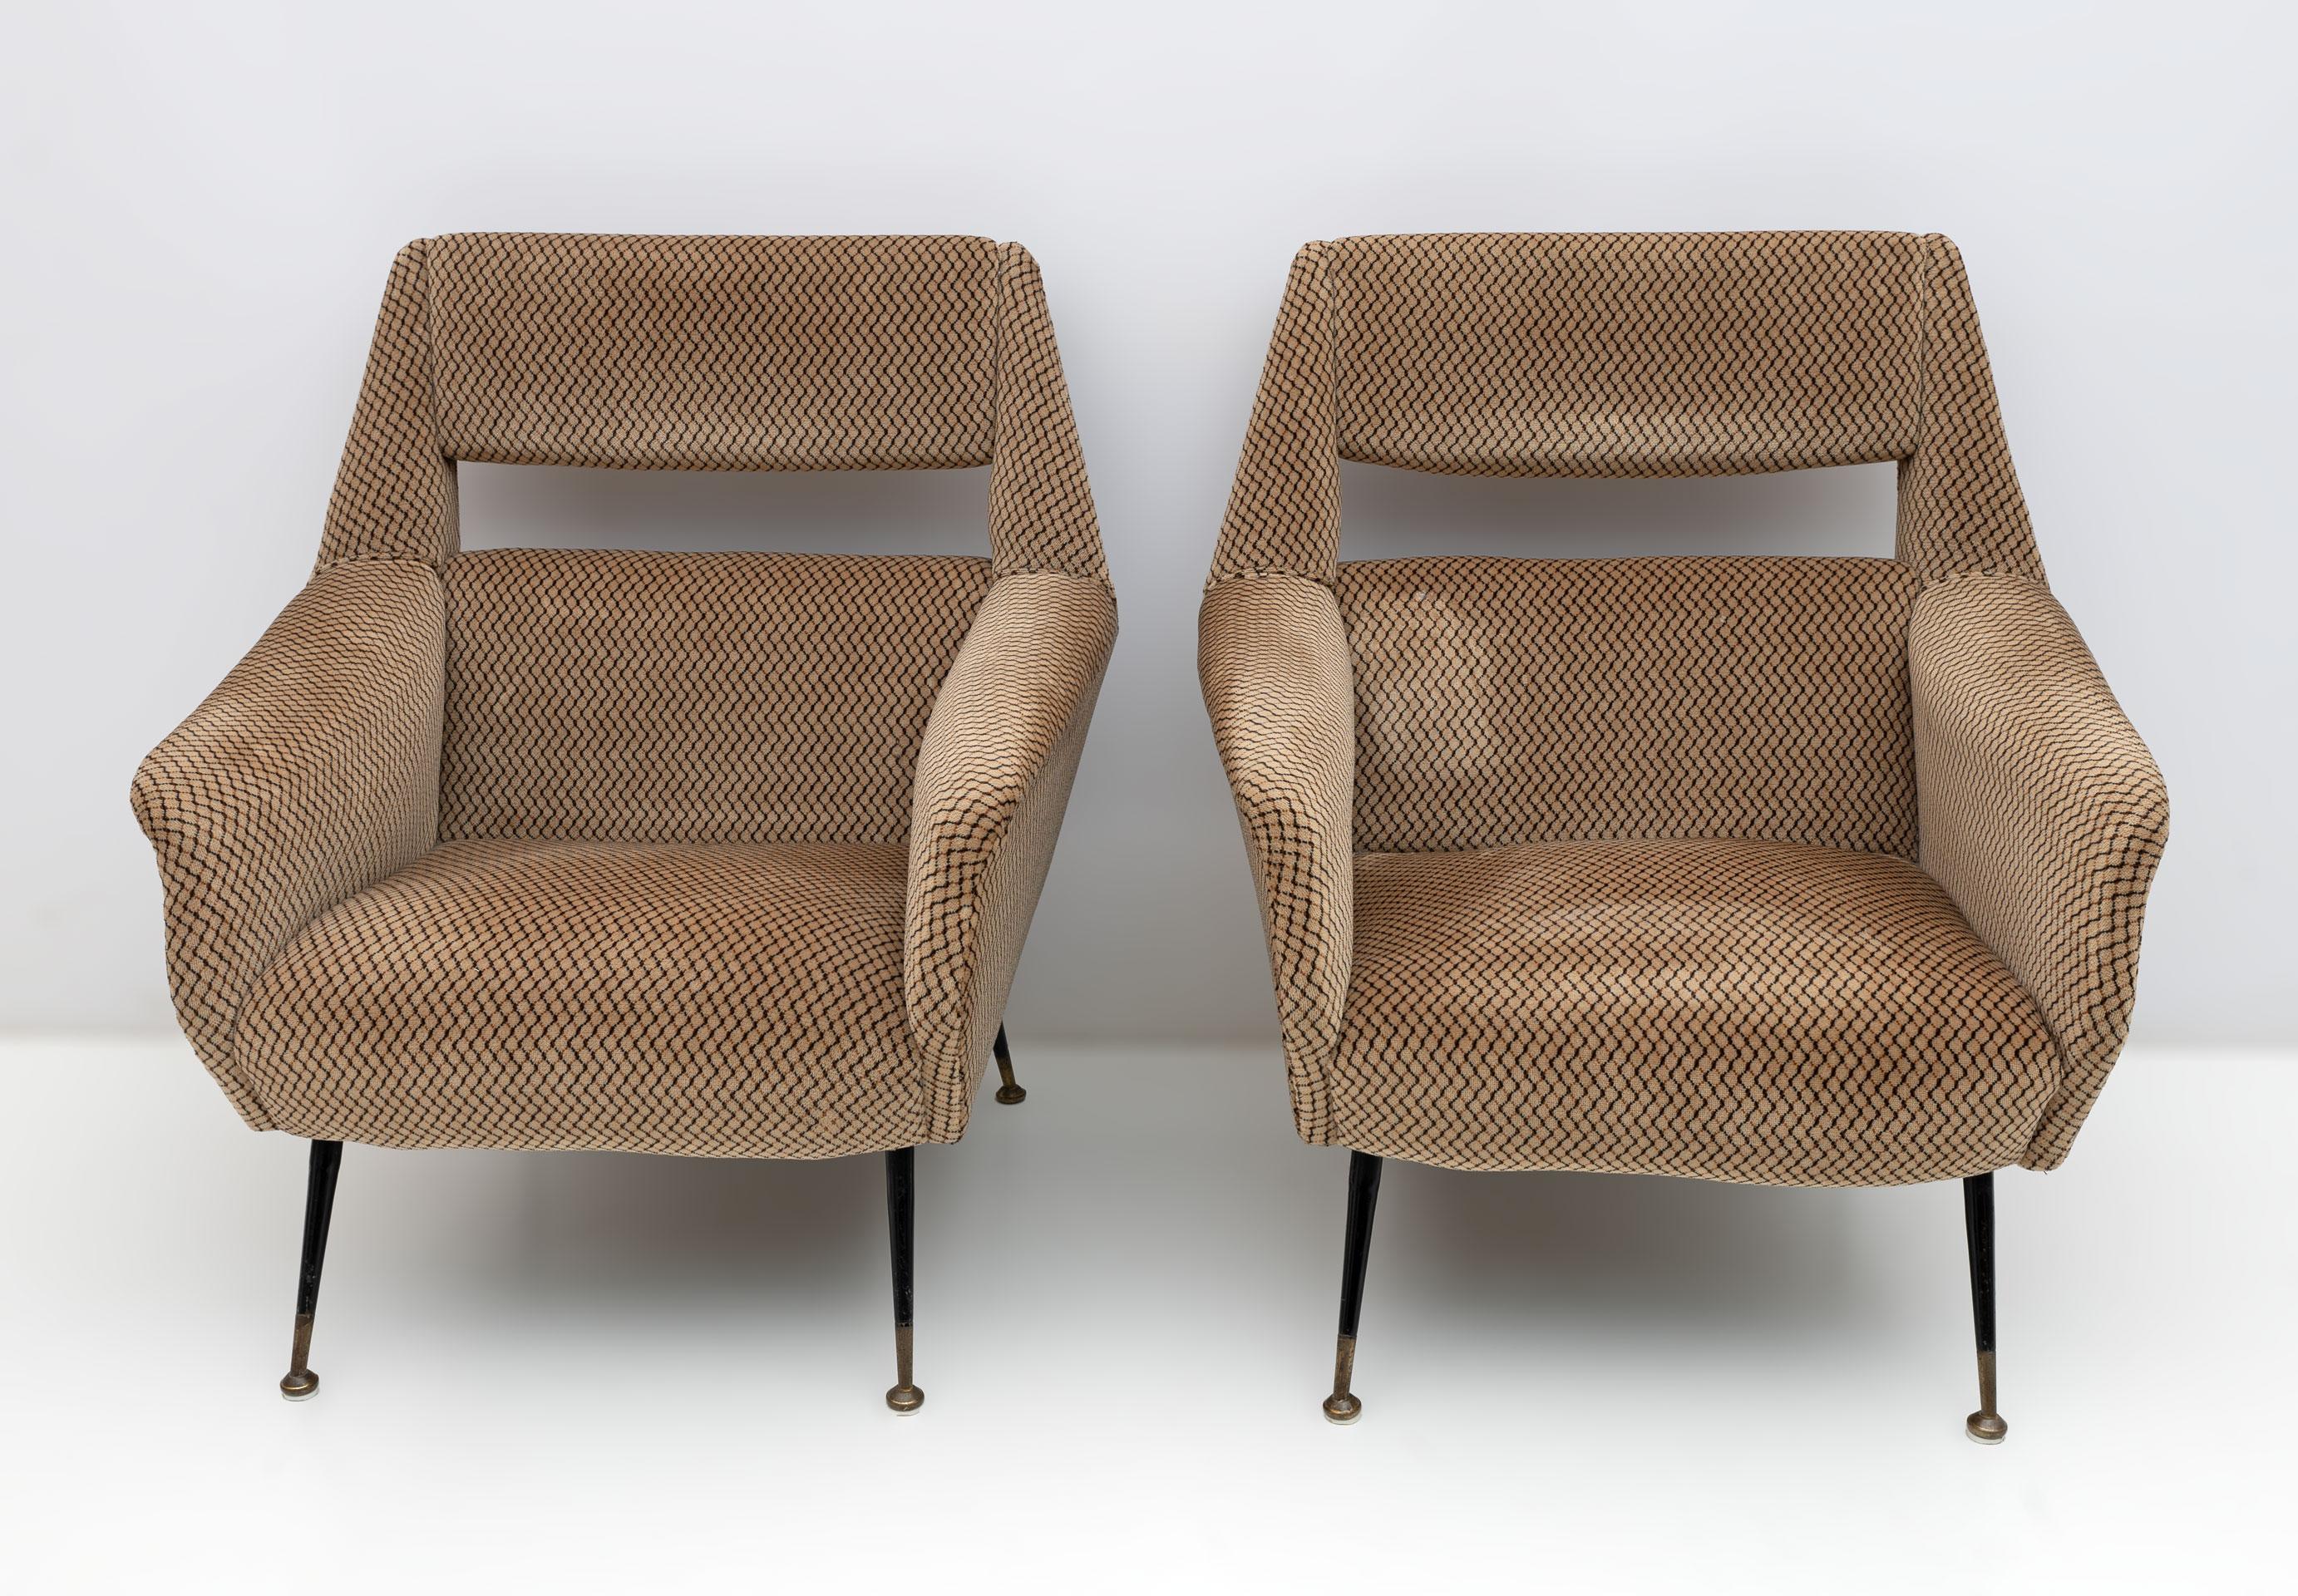 Pair of Gigi Radice Mid-Century Modern Armchairs for Minotti Italia, 1950s For Sale 2